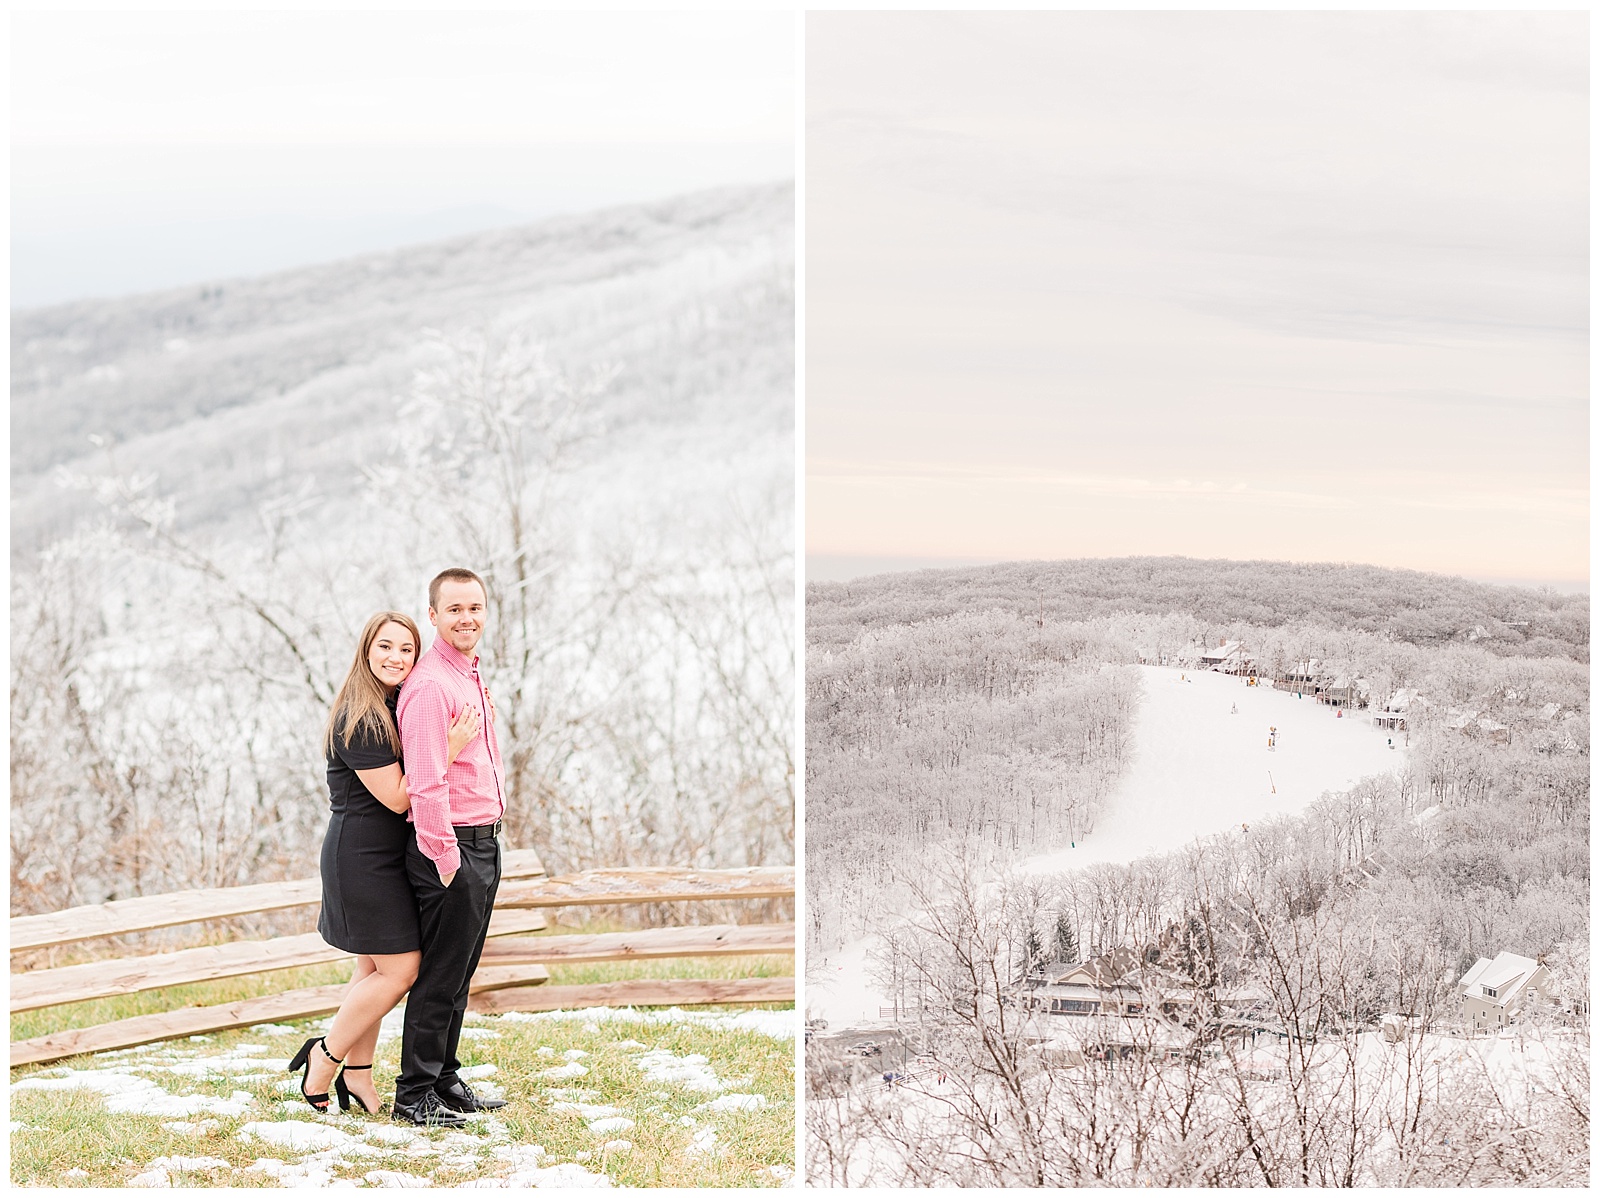 A Snowy Wintergreen Proposal | Sean and Lindsey | Virginia Wedding Photographer31.jpg